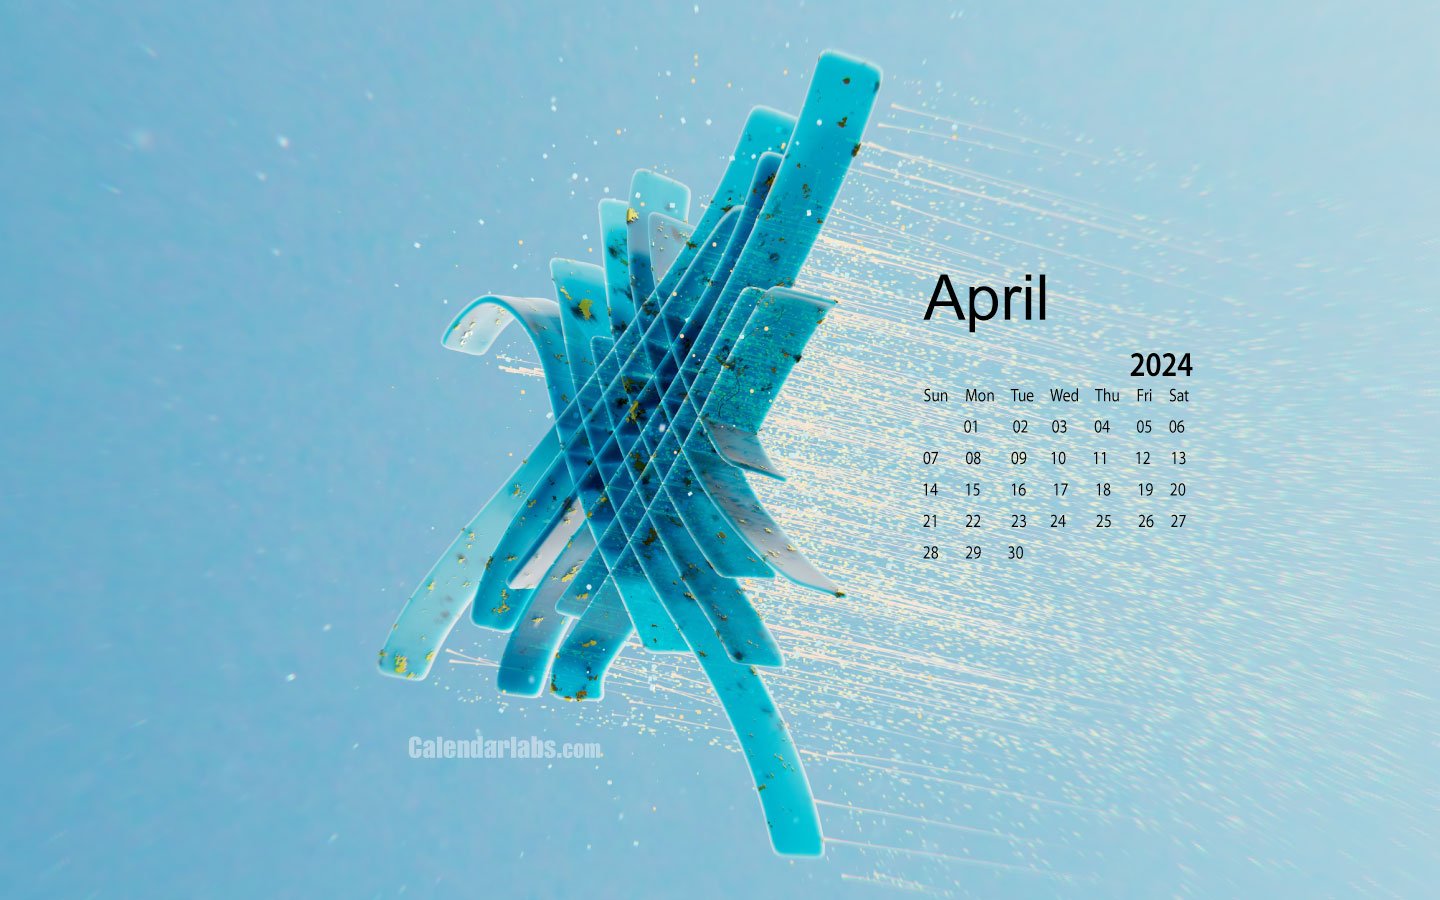 April 2024 Desktop Wallpaper Calendar